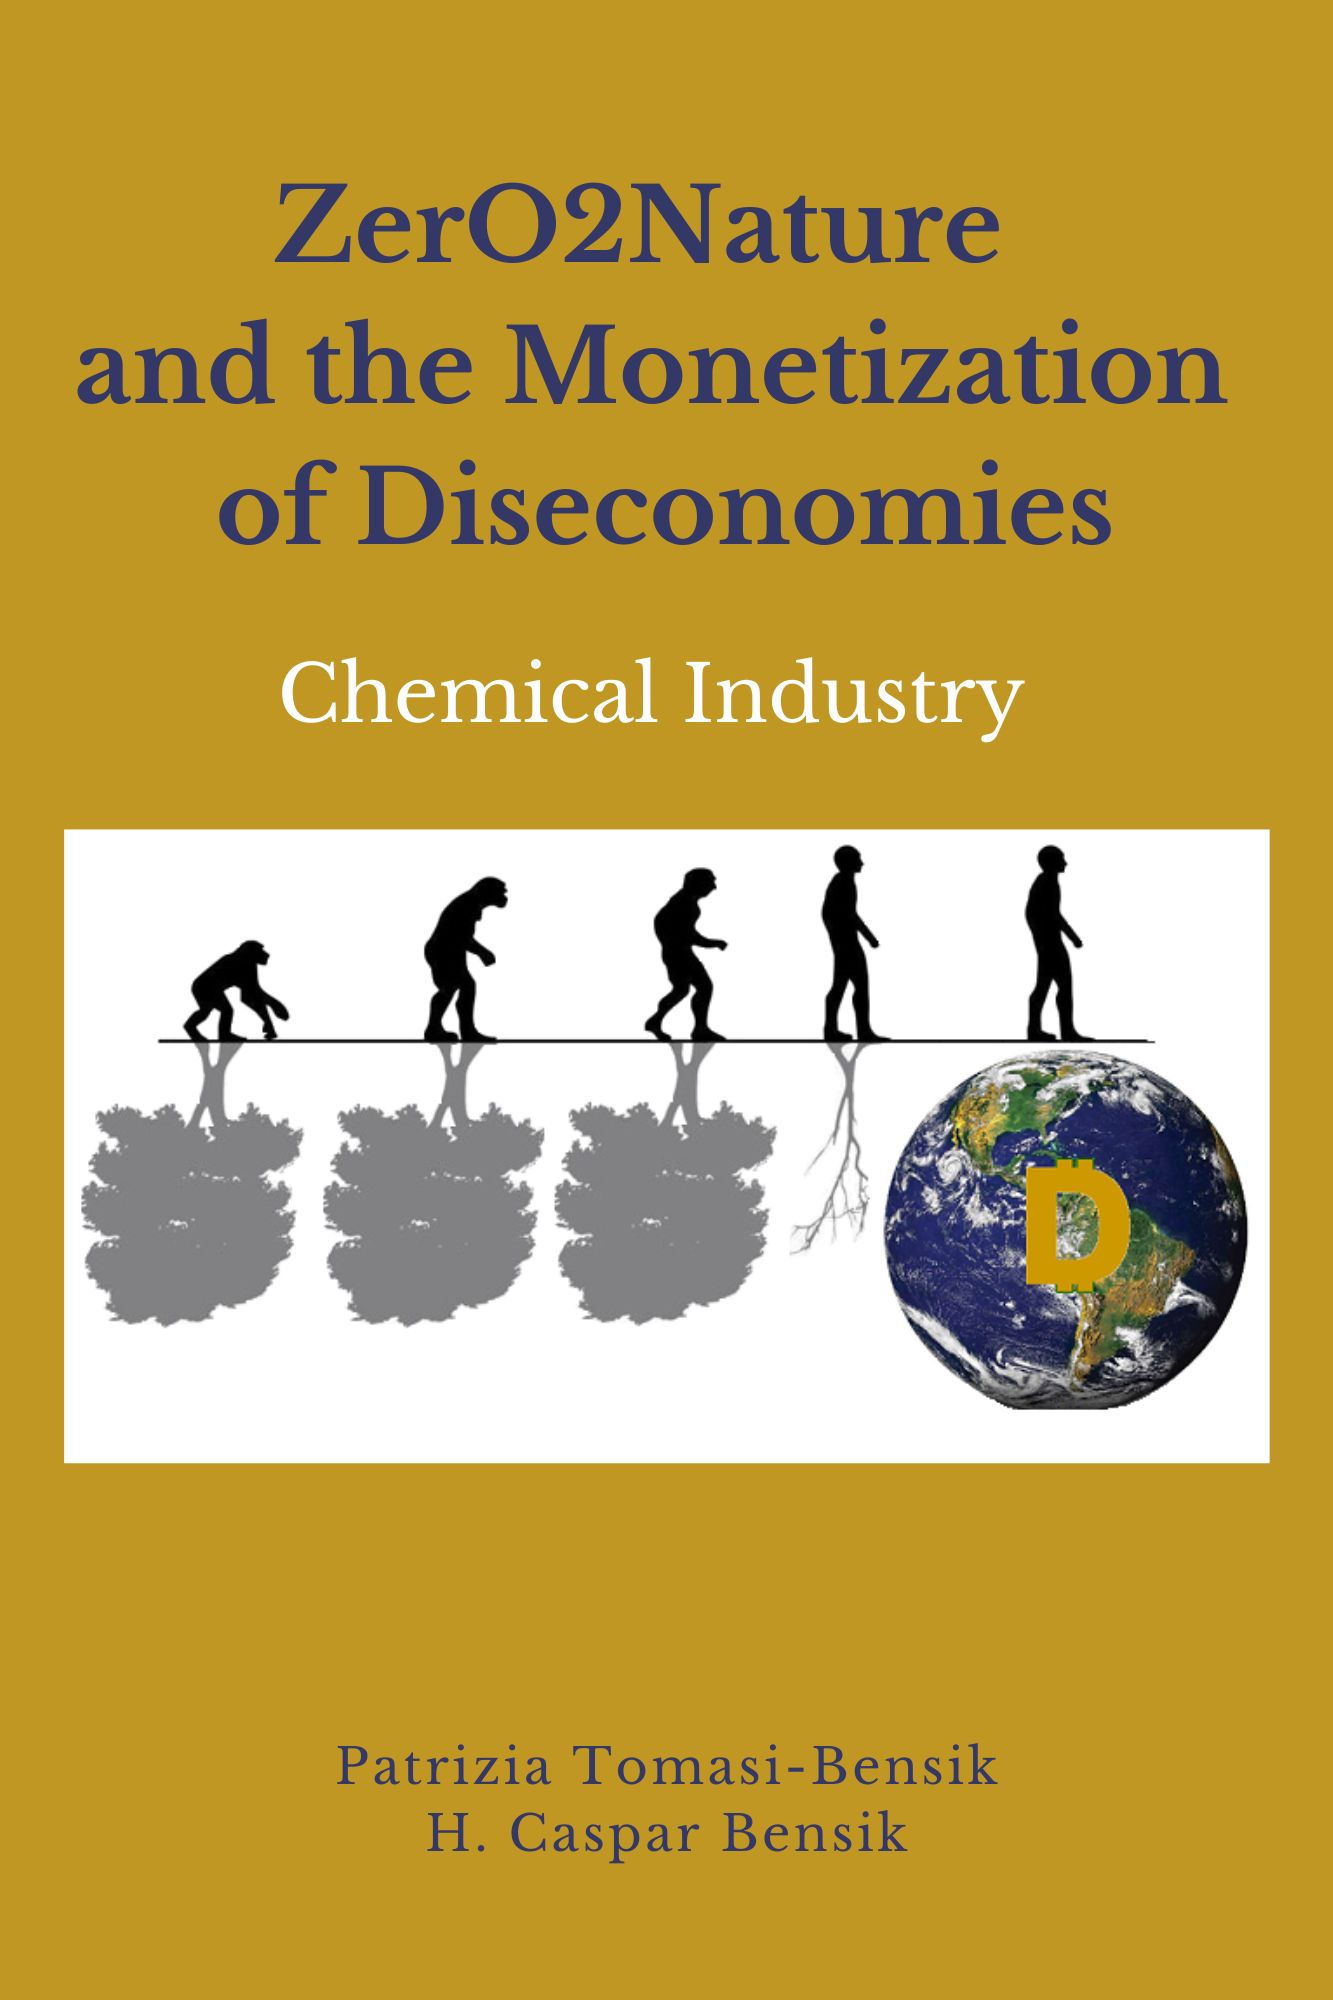 ZerO2Nature and the Monetization of Diseconomies